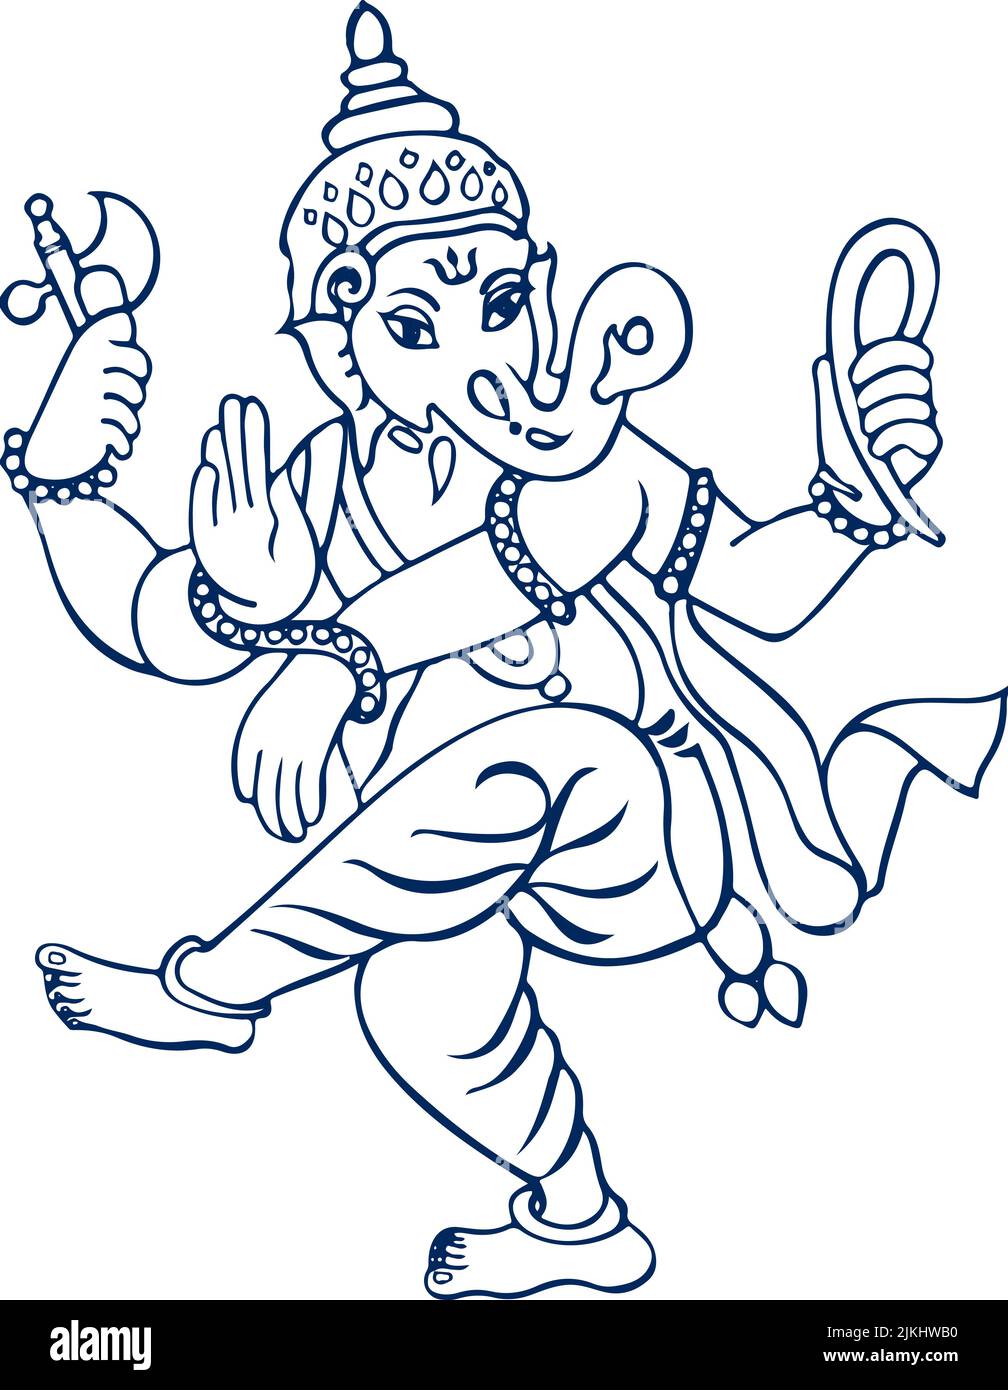 4,783 Ganesha Draw Images, Stock Photos & Vectors | Shutterstock